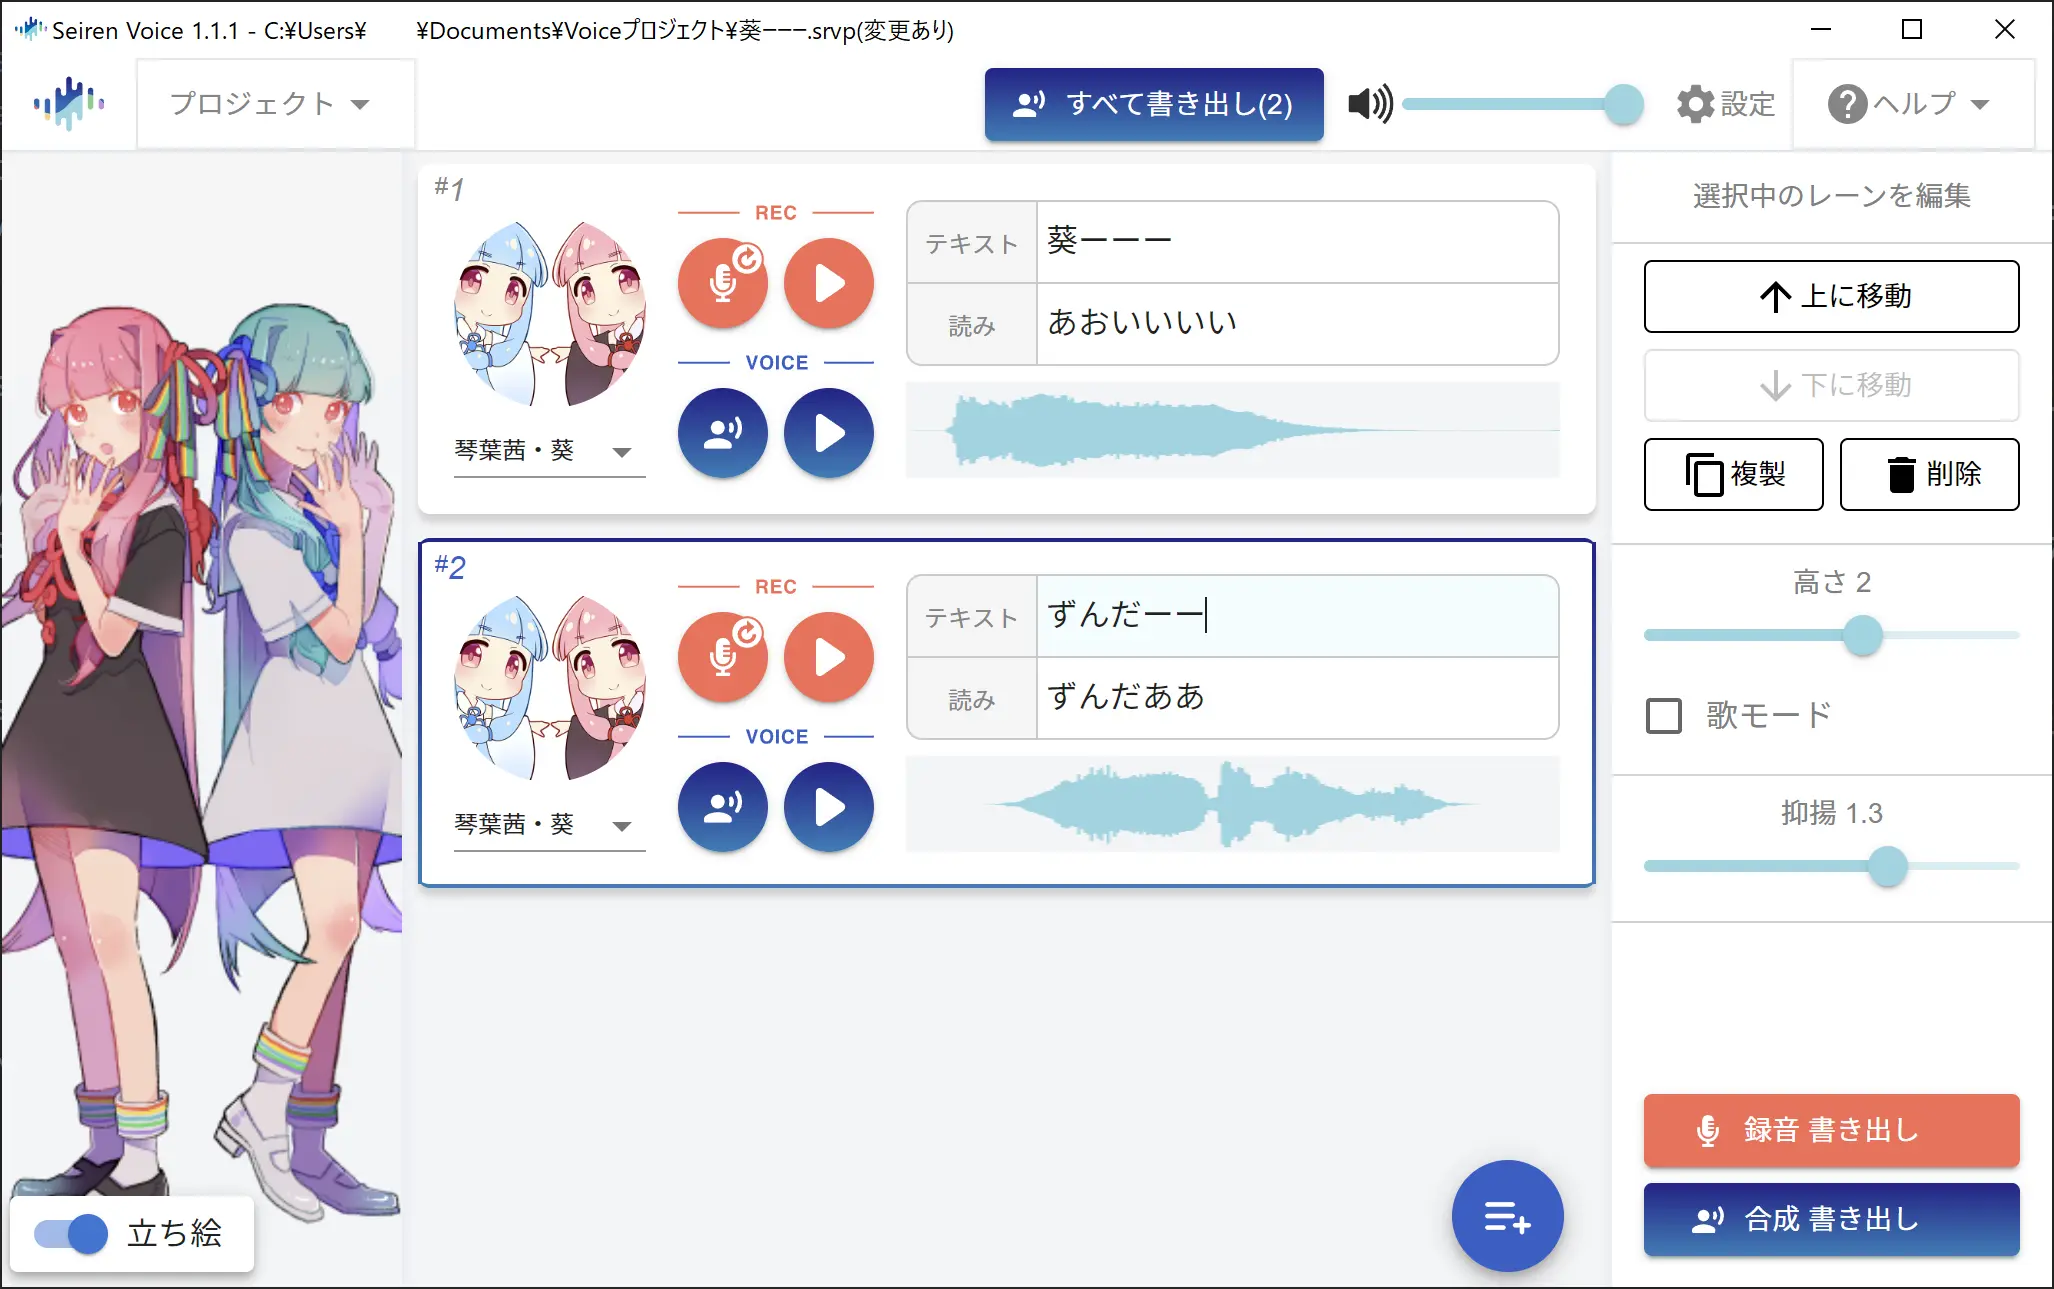 AoiSupport -音声合成ソフトを利用した動画制作の支援ツール-